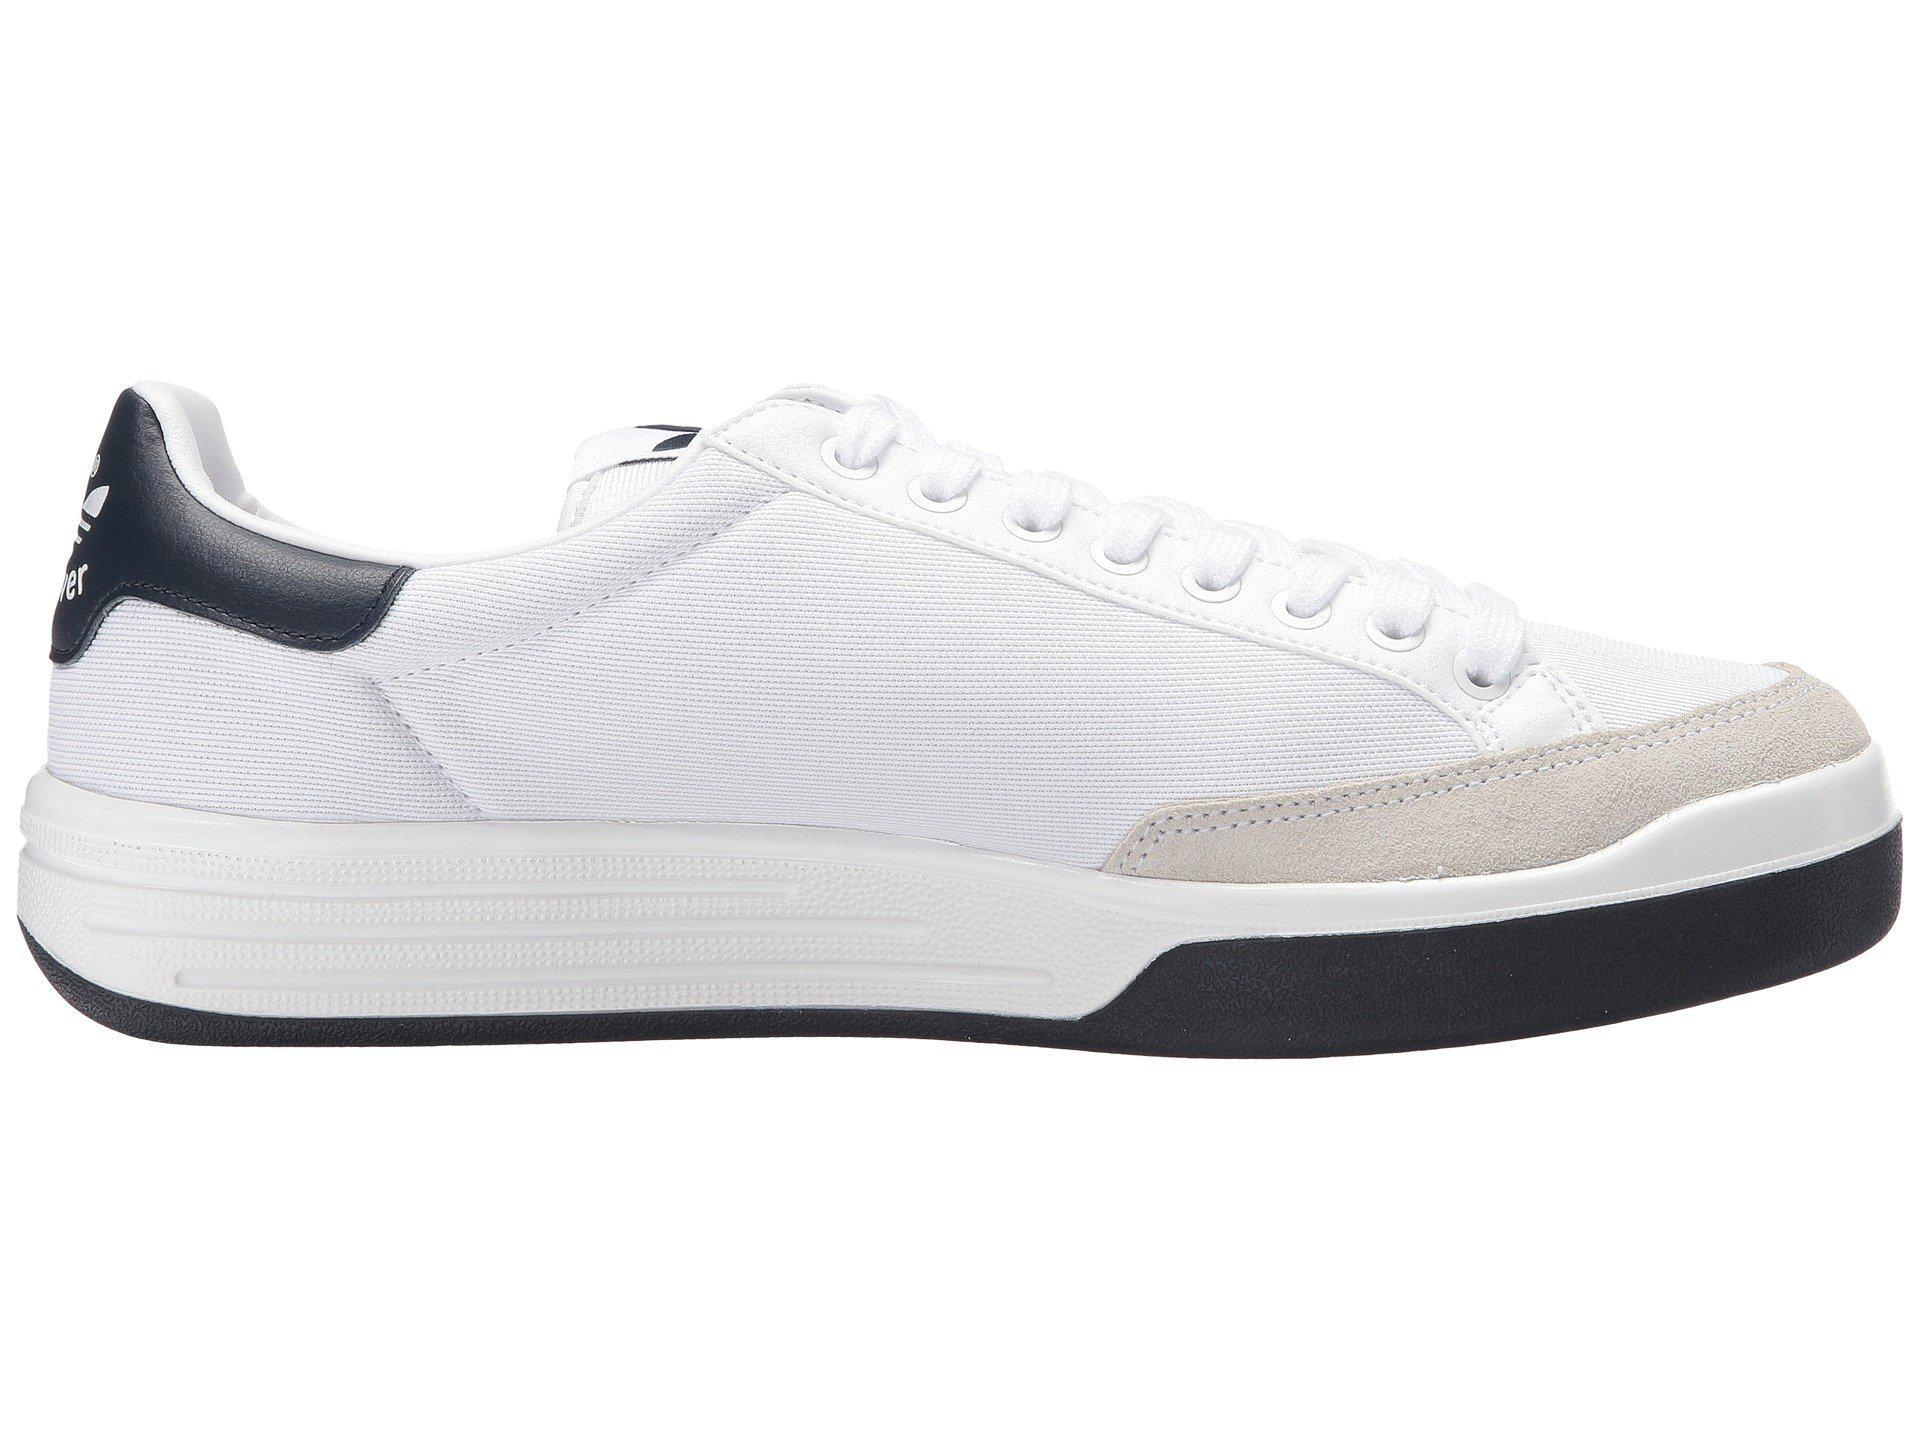 adidas Originals Suede Rod Laver Super (footwear White/footwear White/collegiate  Navy) Men's Tennis Shoes for Men | Lyst